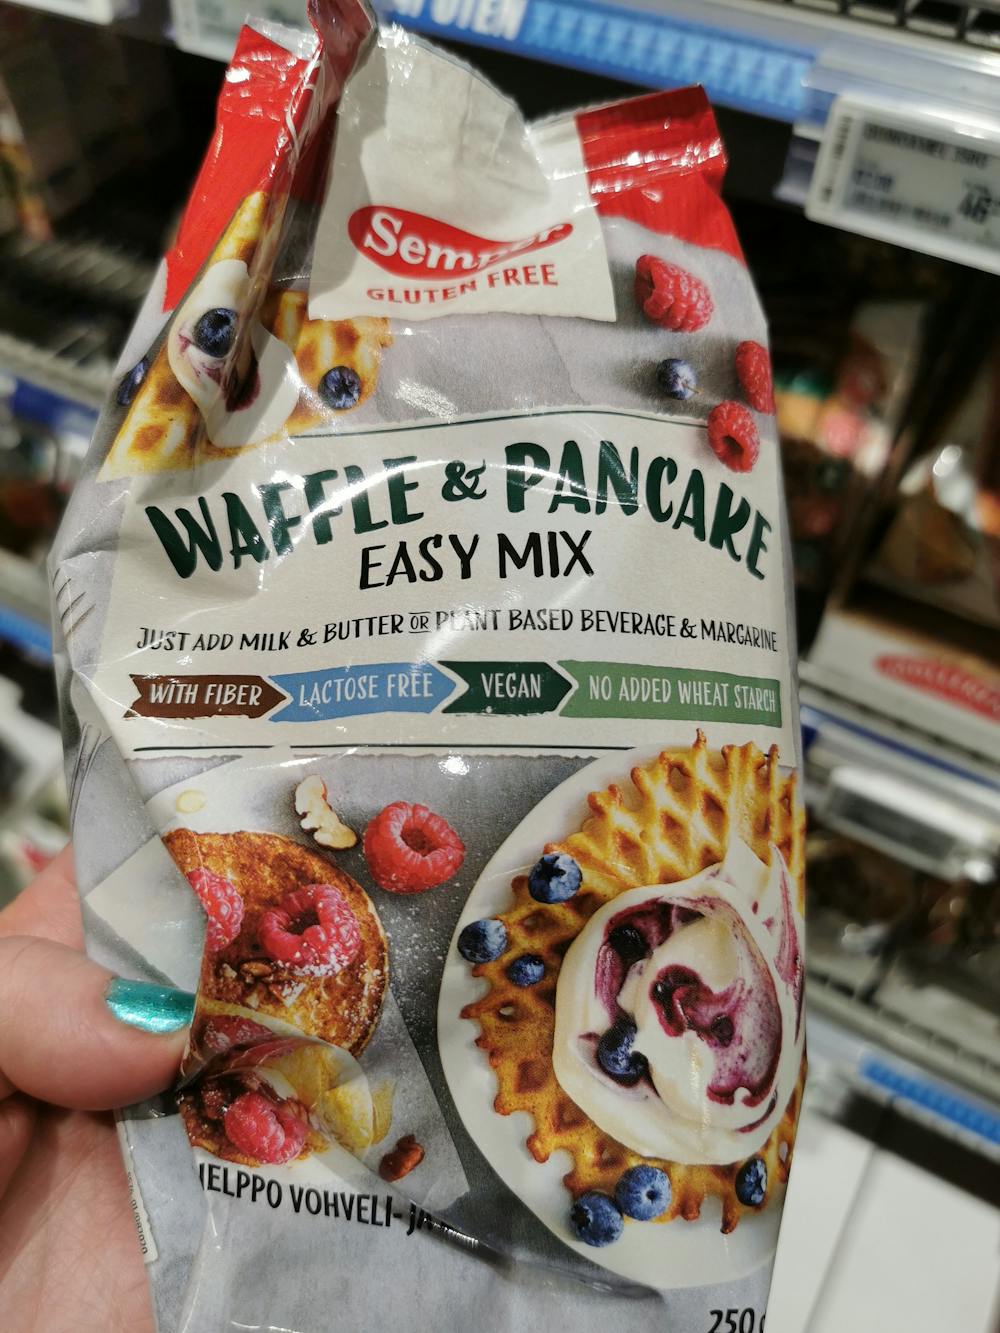 Waffle & pancake easy mix, Semper